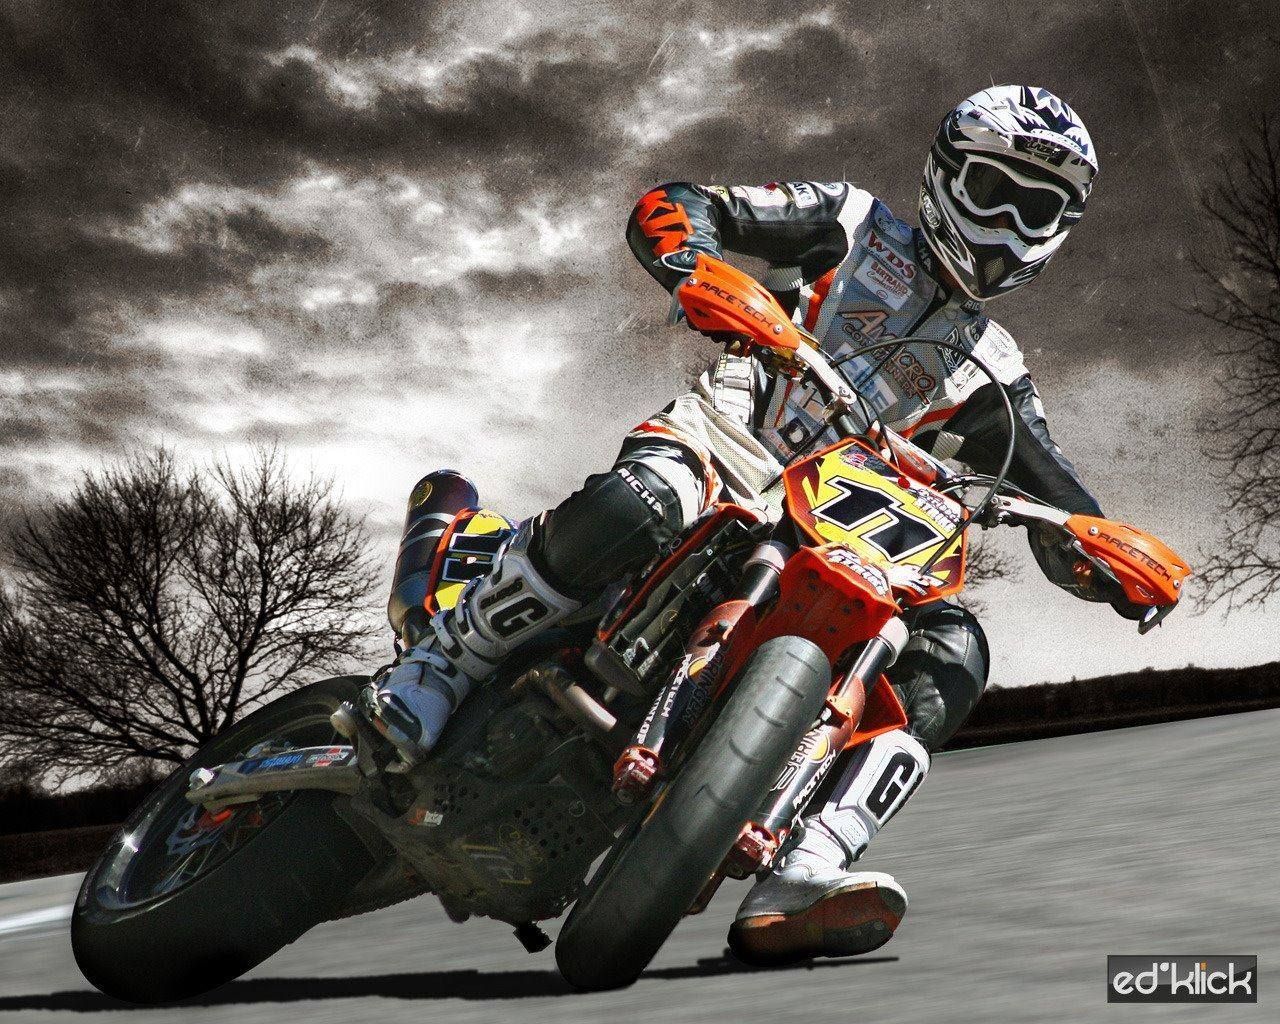 Best Supermoto image. Supermoto, Motorcycle, Bike